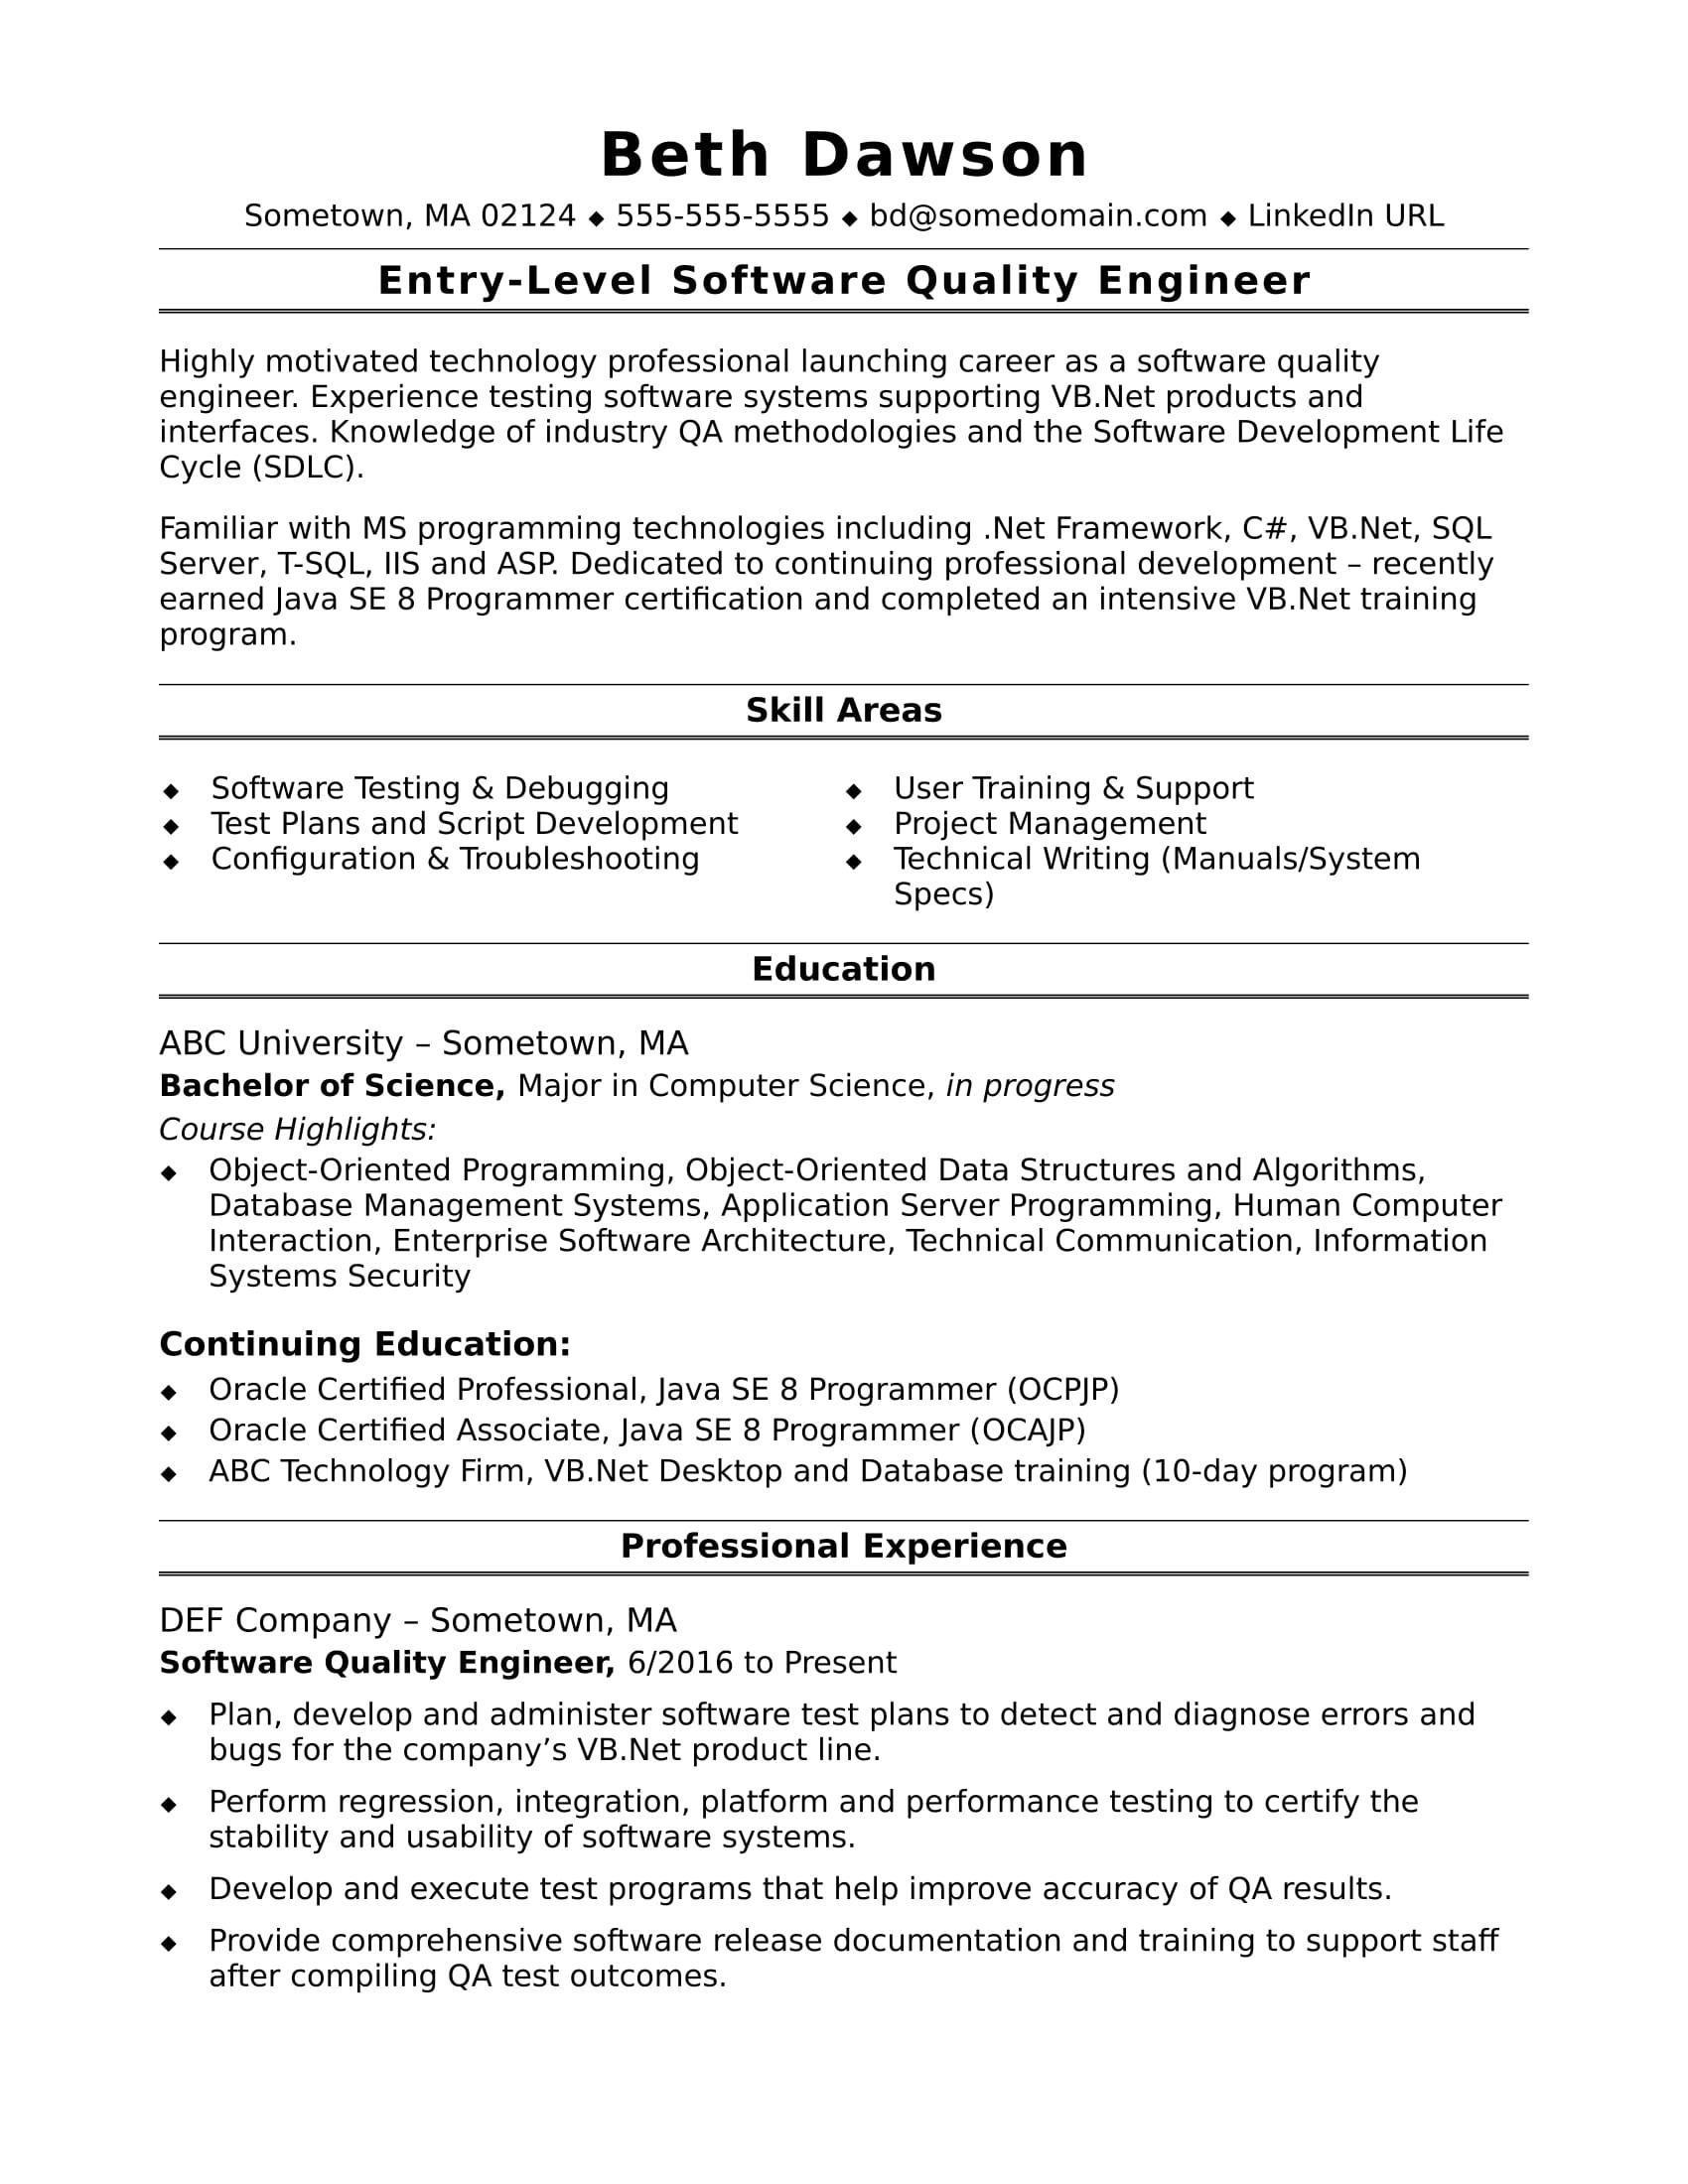 Sample Resume Headline for software Engineer Fresher Sample Resume for An Entry-level Quality Engineer Monster.com